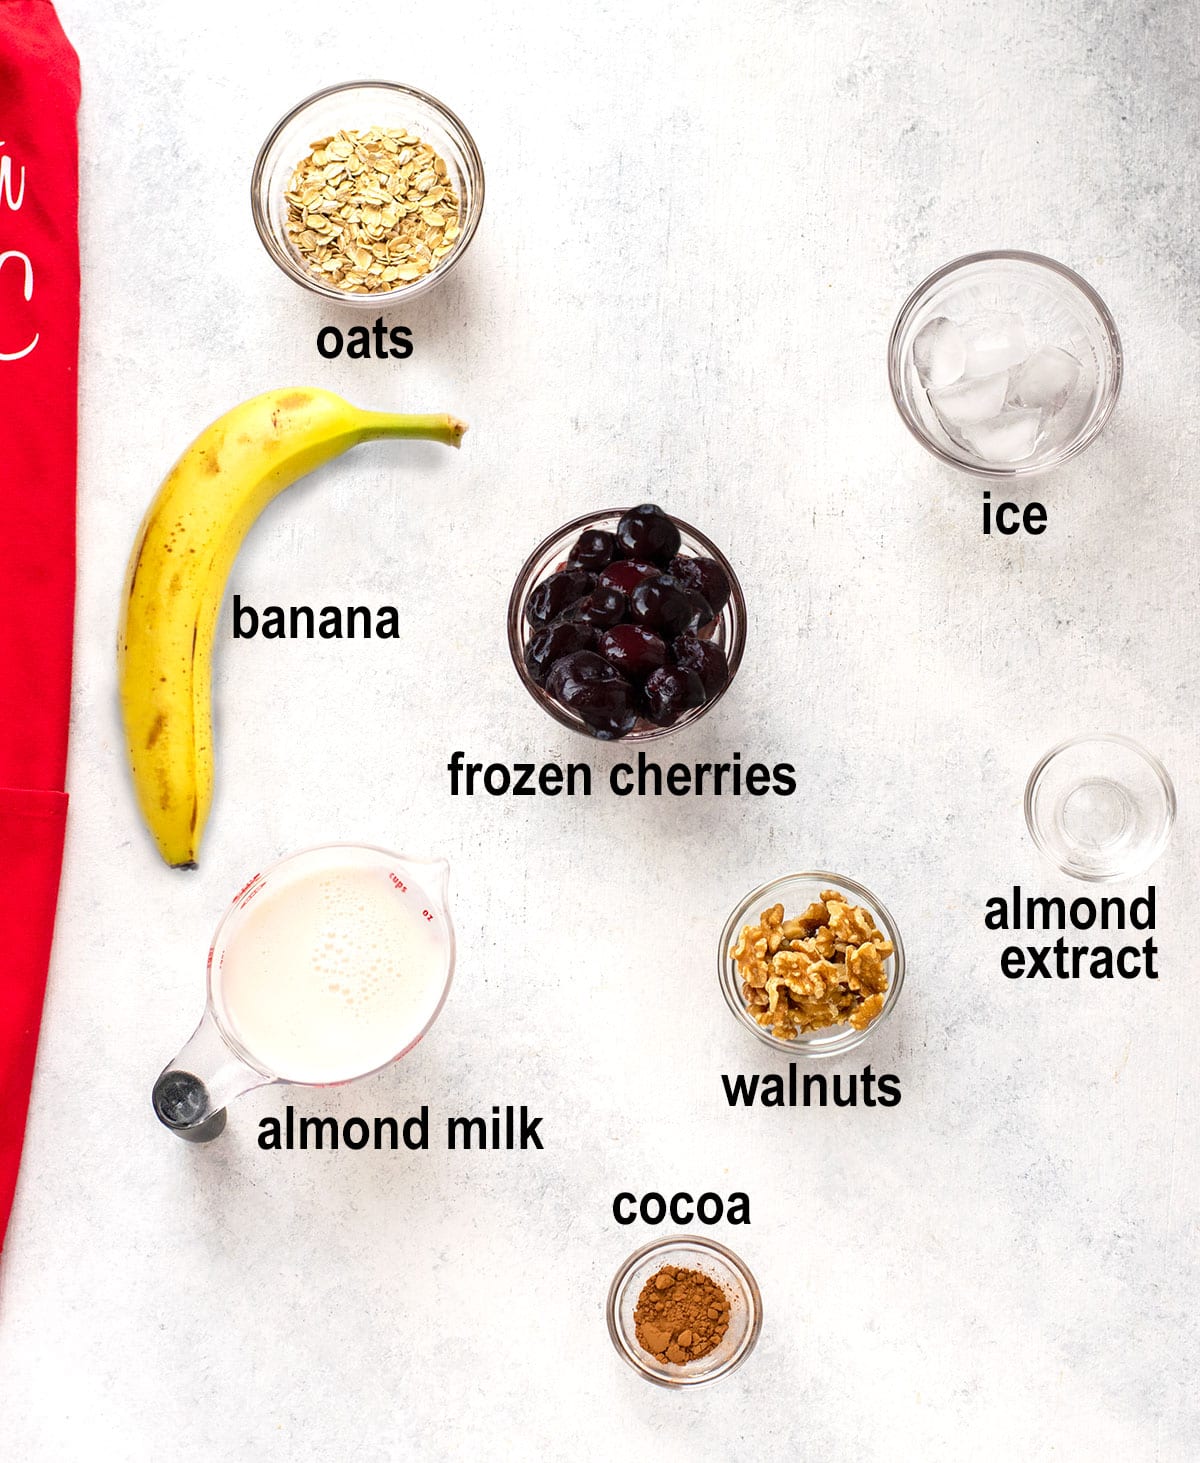 oats, ice, banana, frozen cherries, almond milk, almond extract, walnuts, cocoa